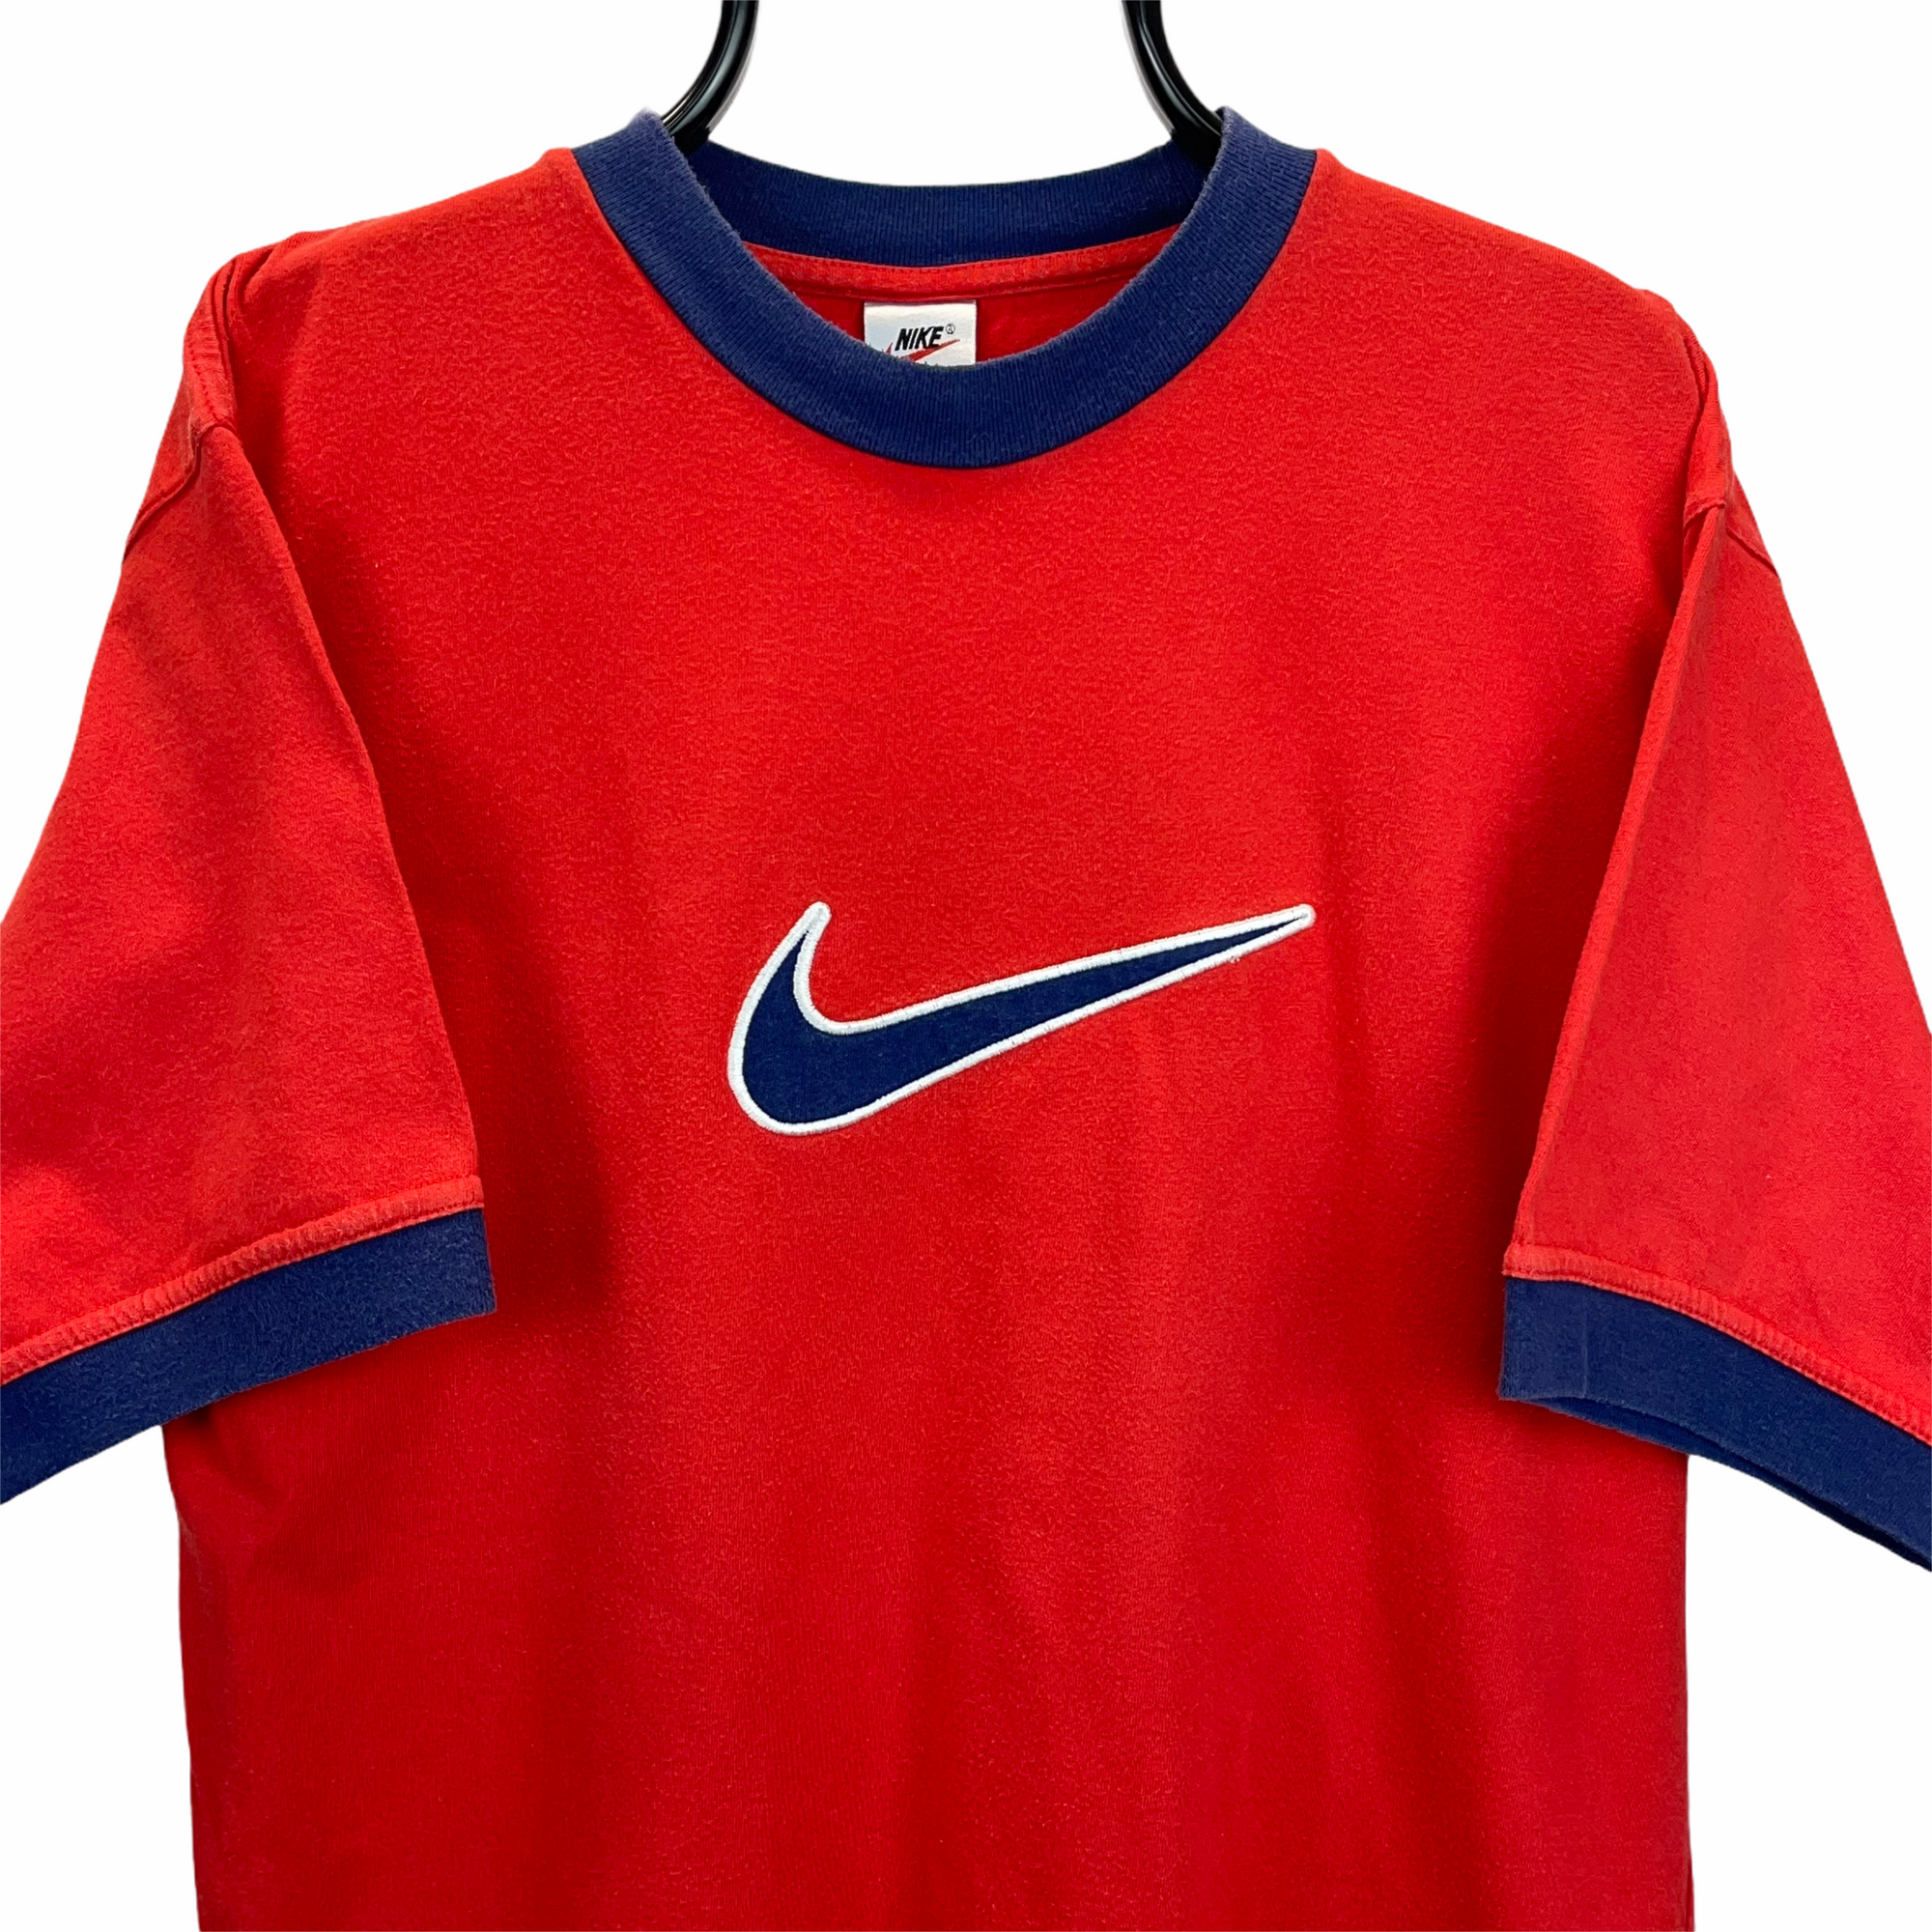 Vintage 90s Nike Embroidered Big Swoosh Tee in Red & Navy - Men's Medium/Women's Large